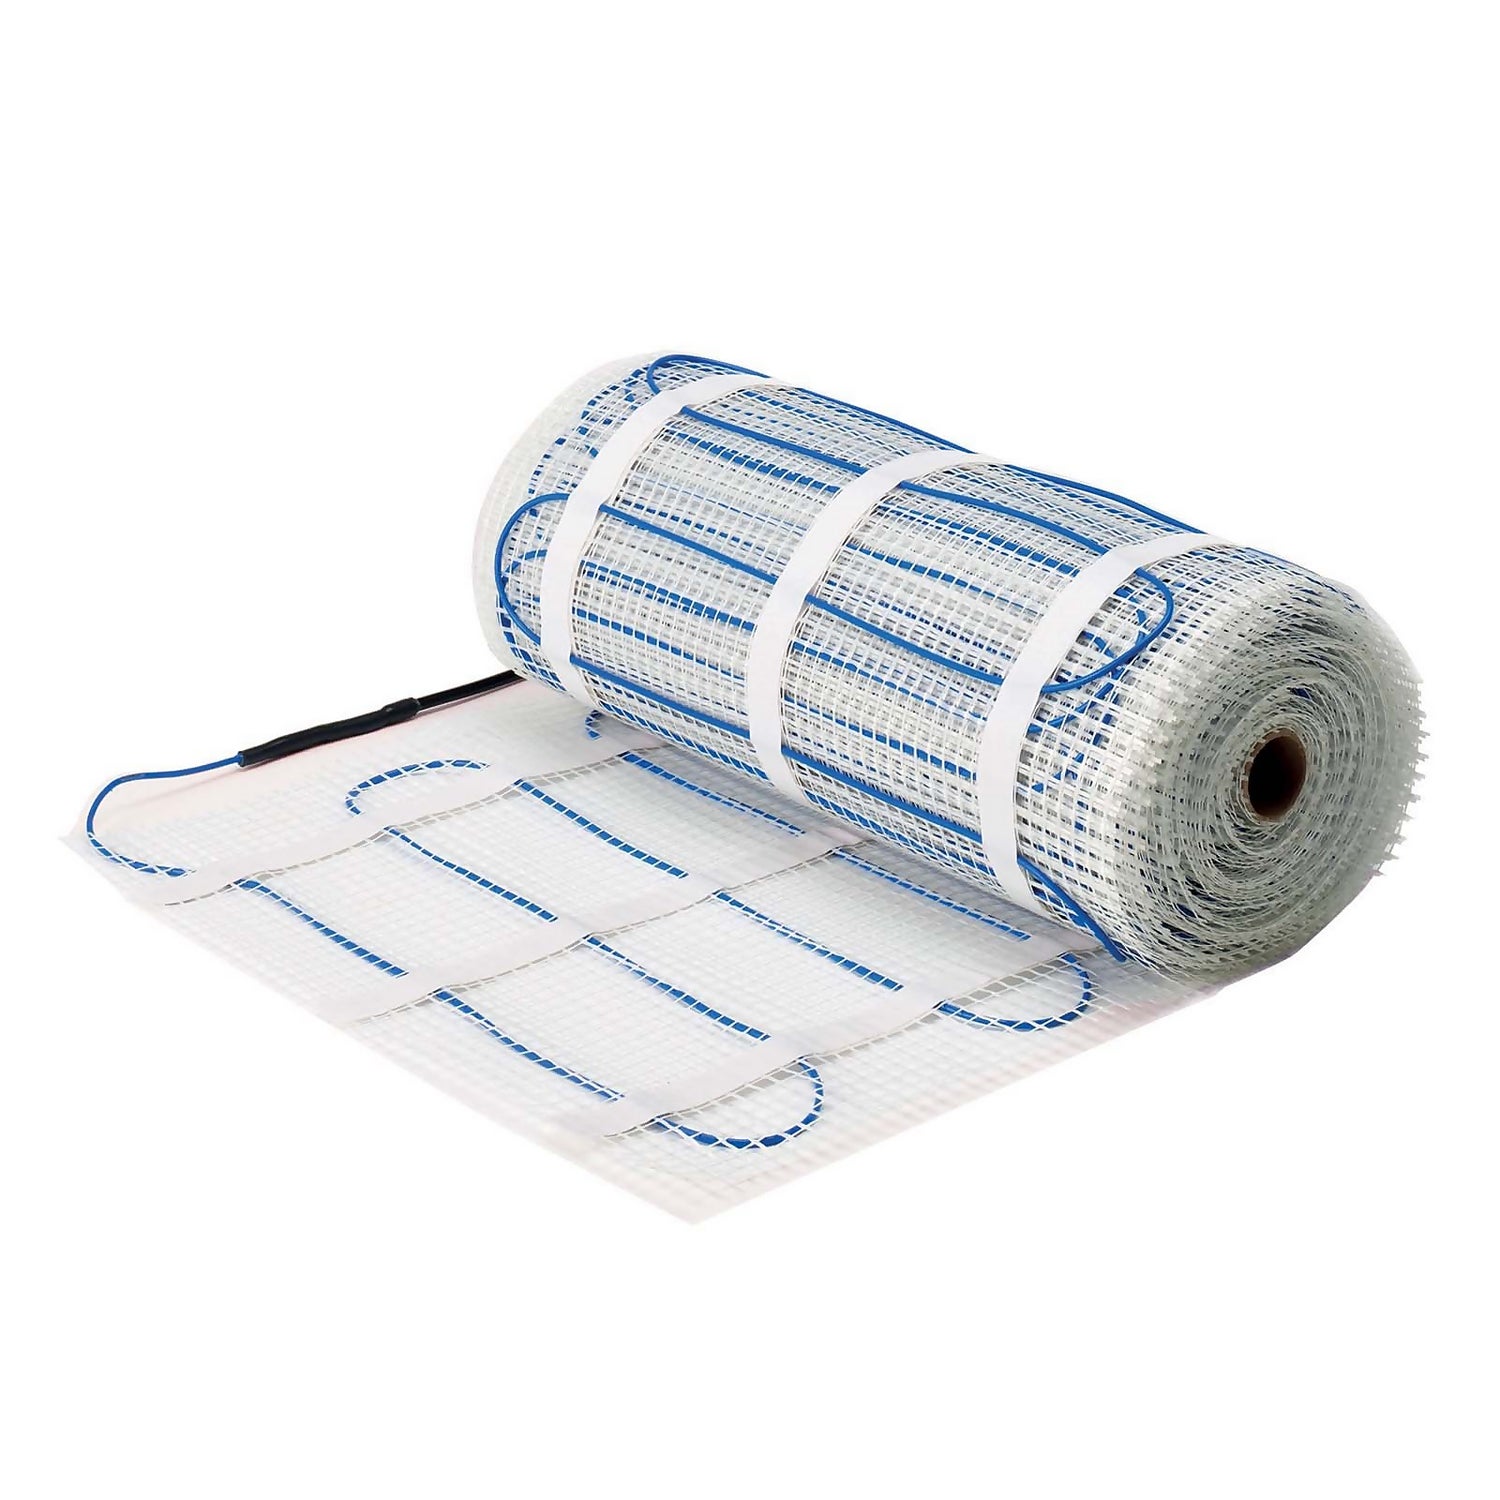 Heat Mat Underfloor Heating Kit with Insulation - 5m